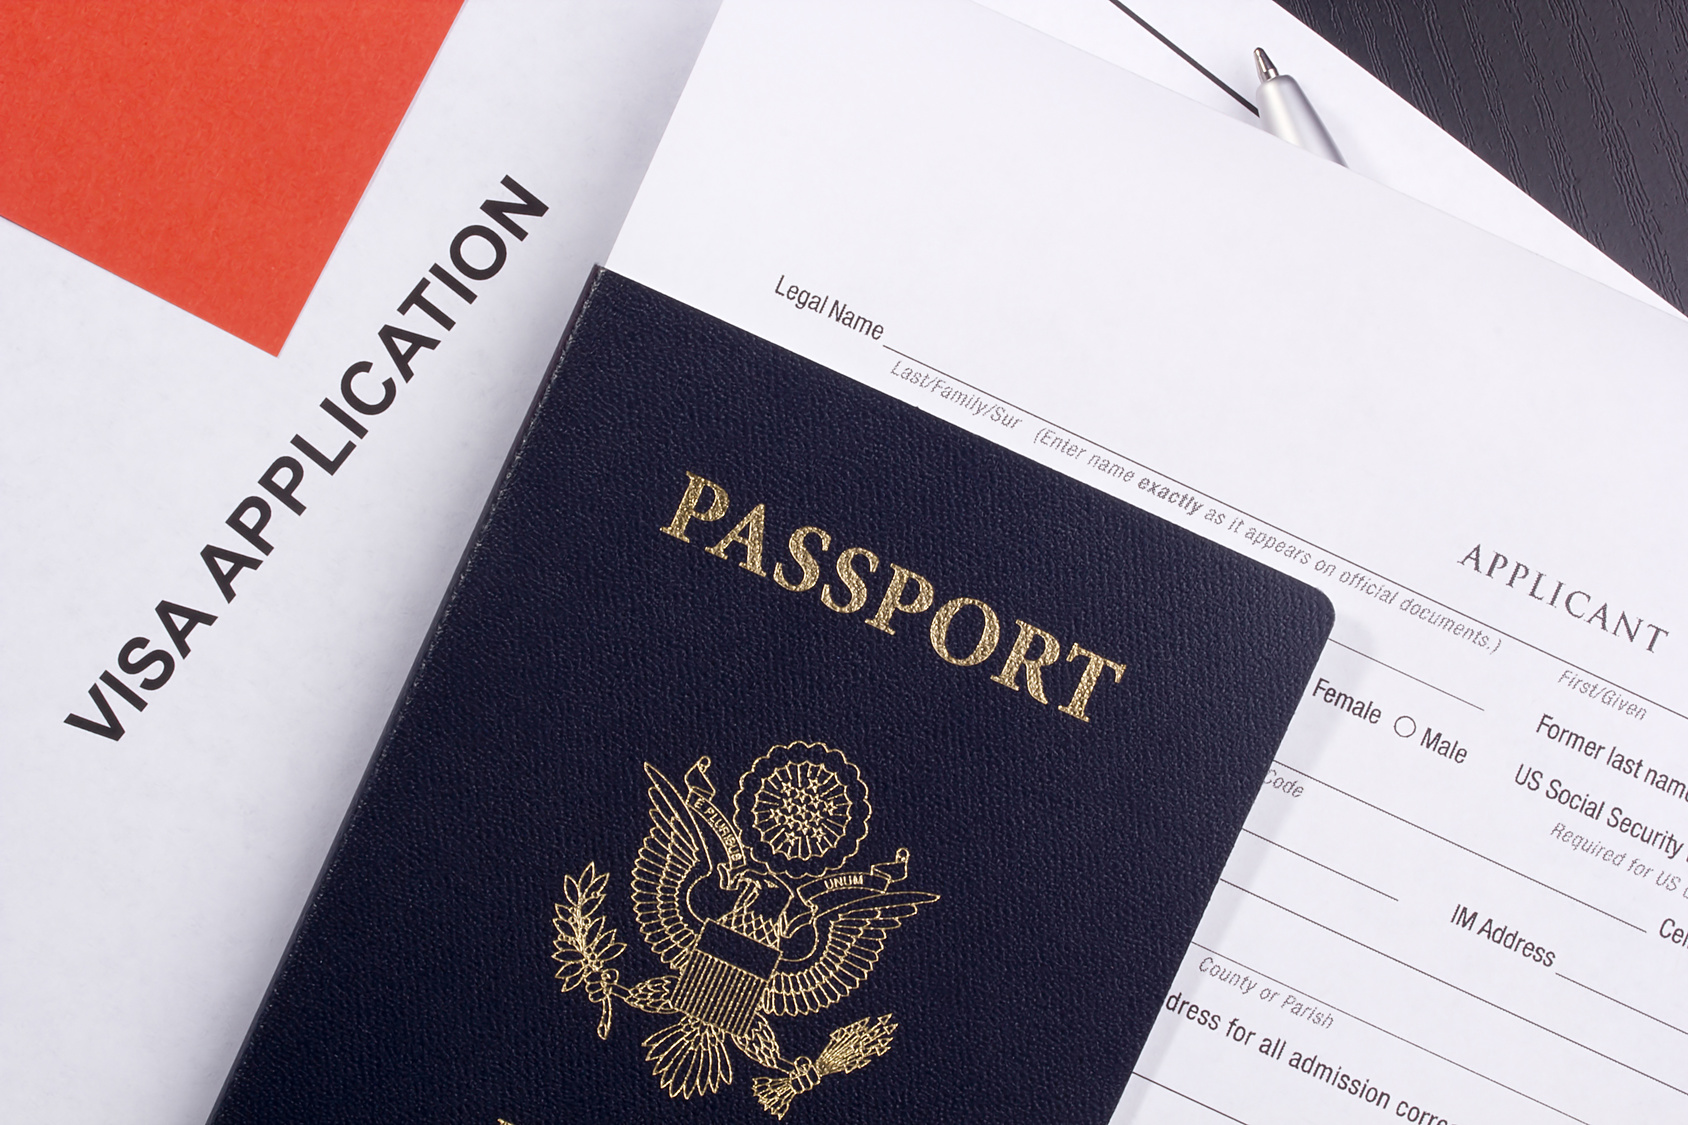 US passport on top of a visa application